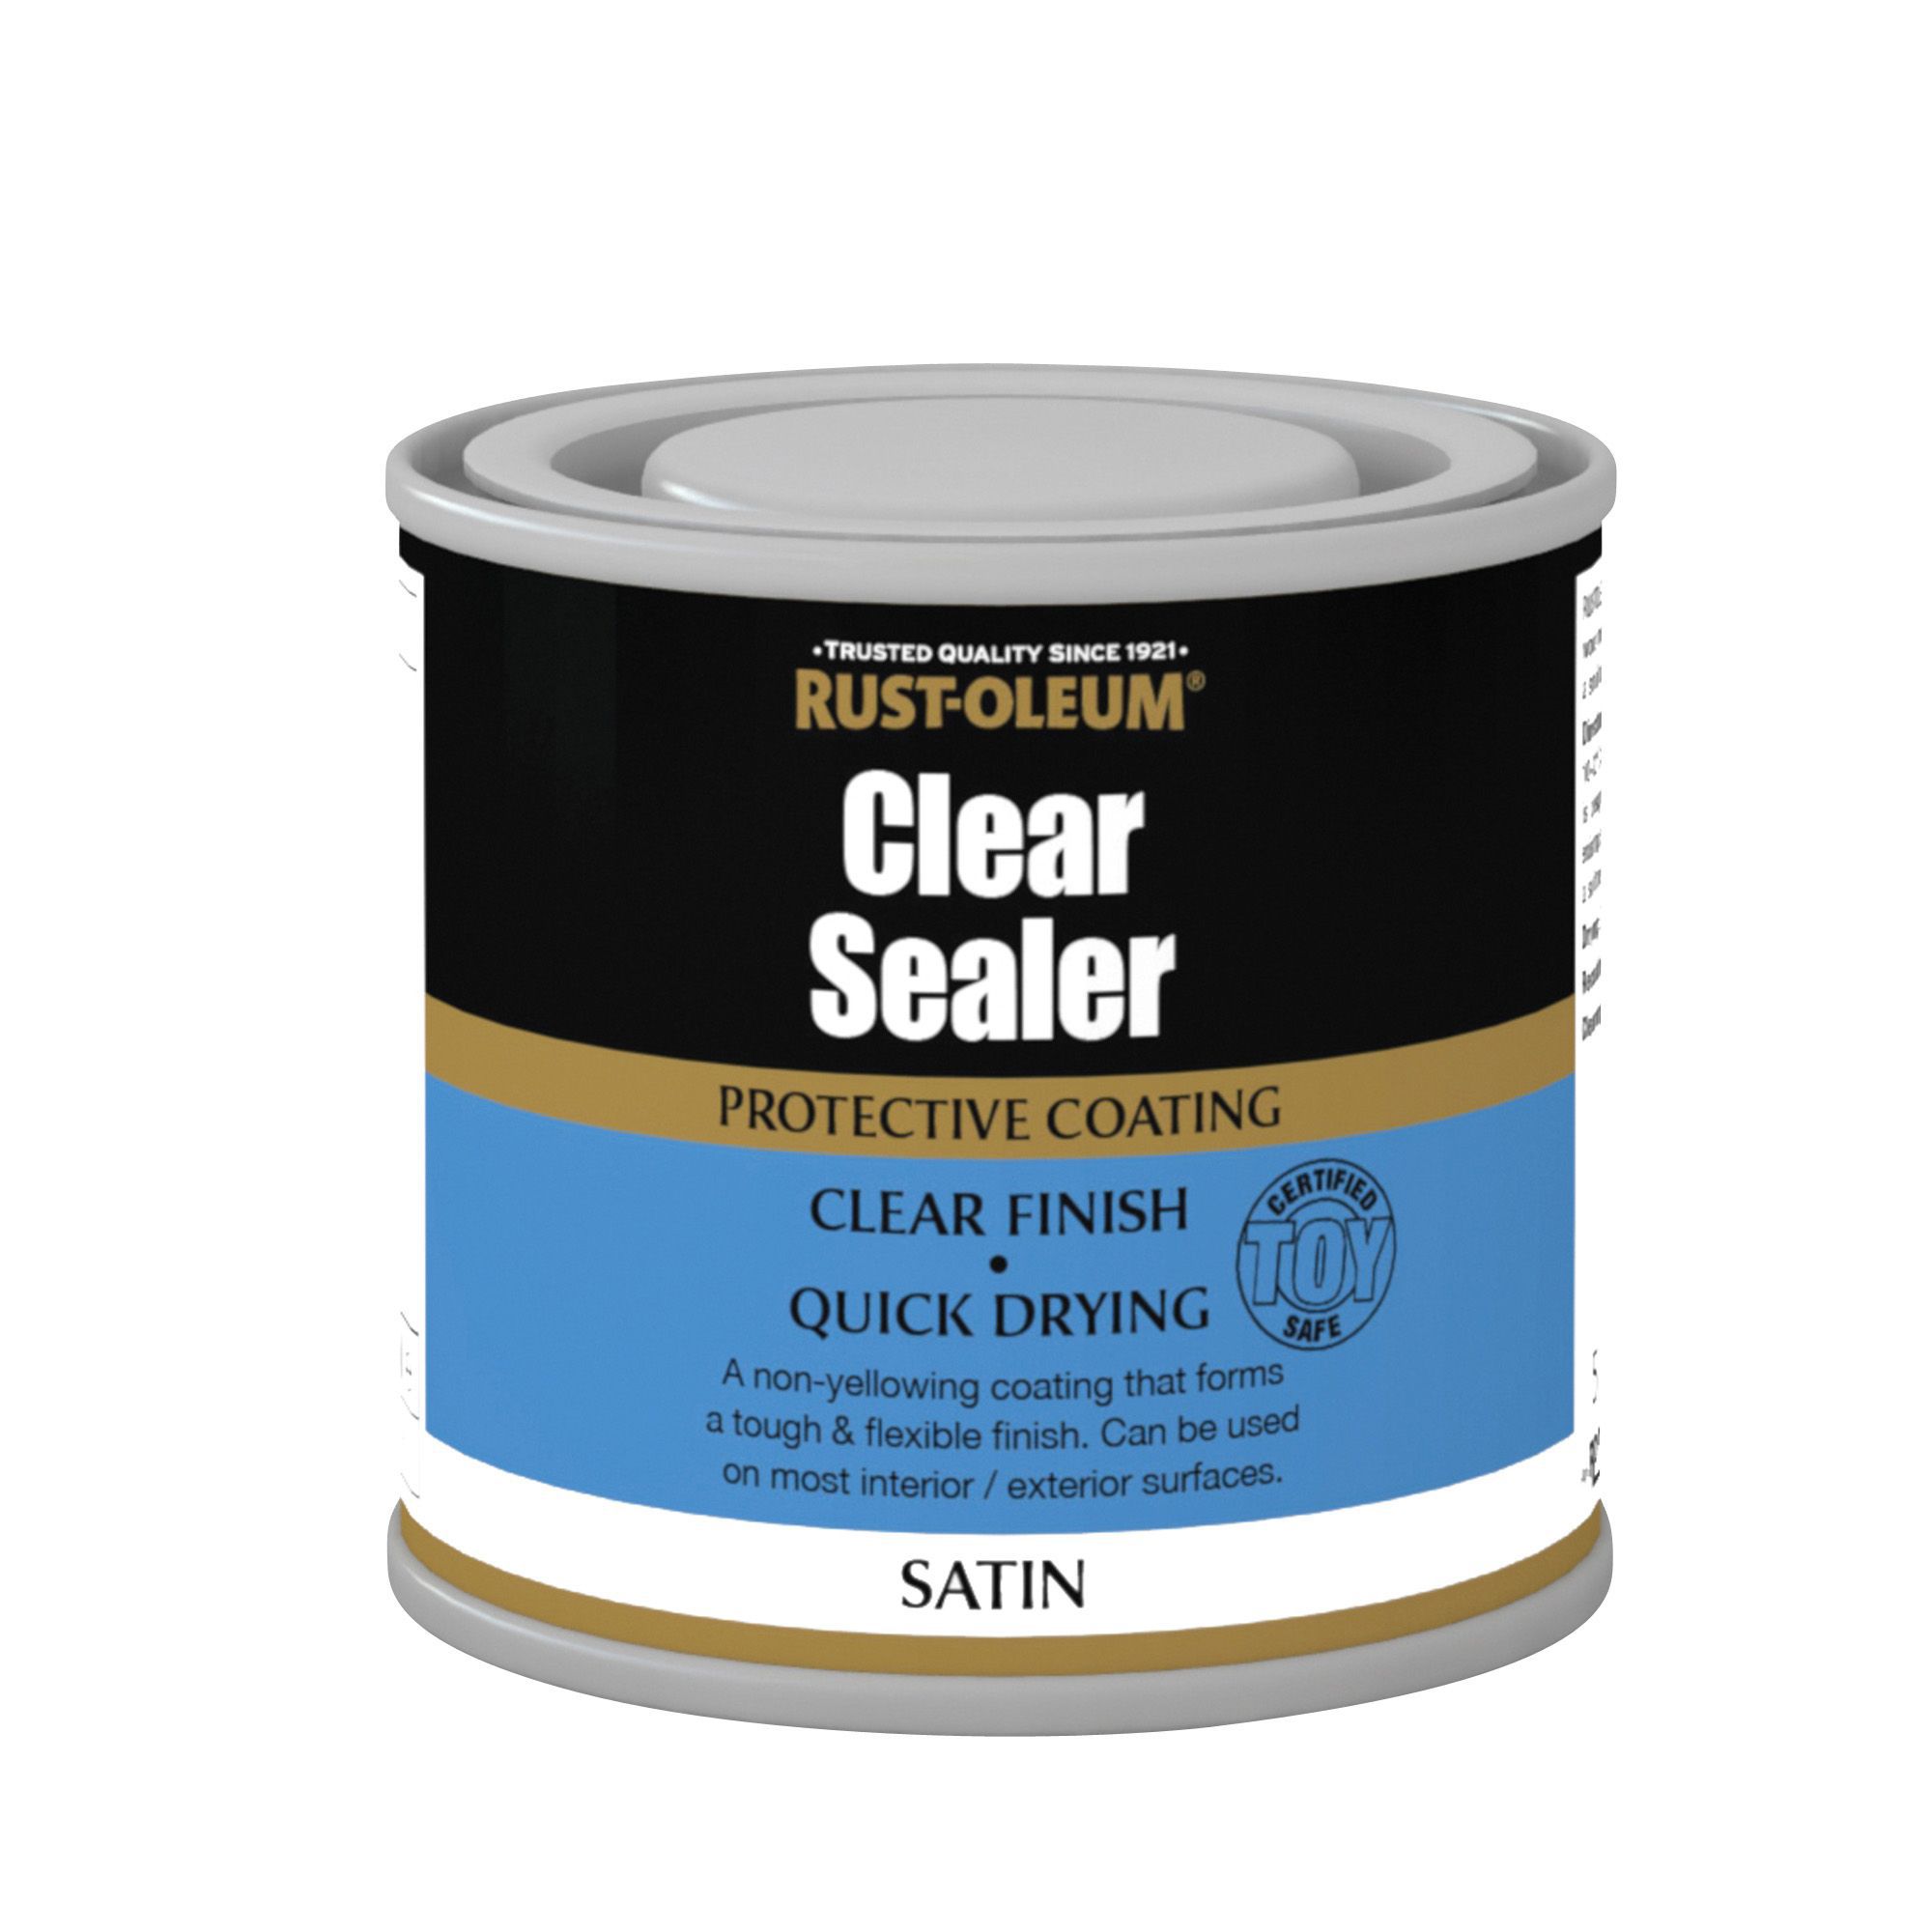 Paint sealer for wood